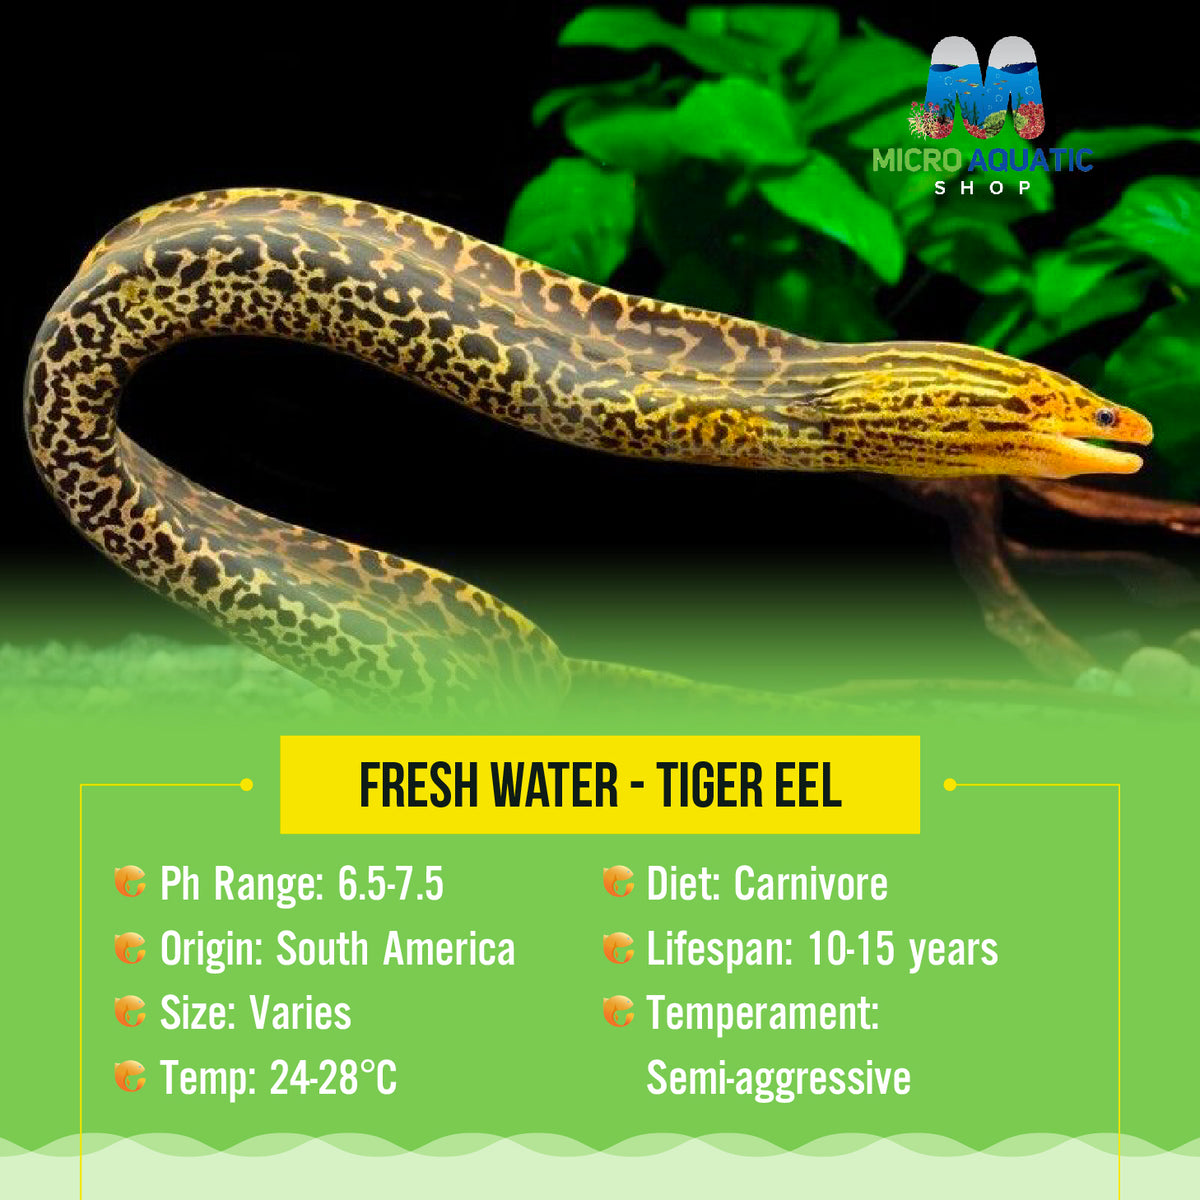 Fresh water - Tiger Eel